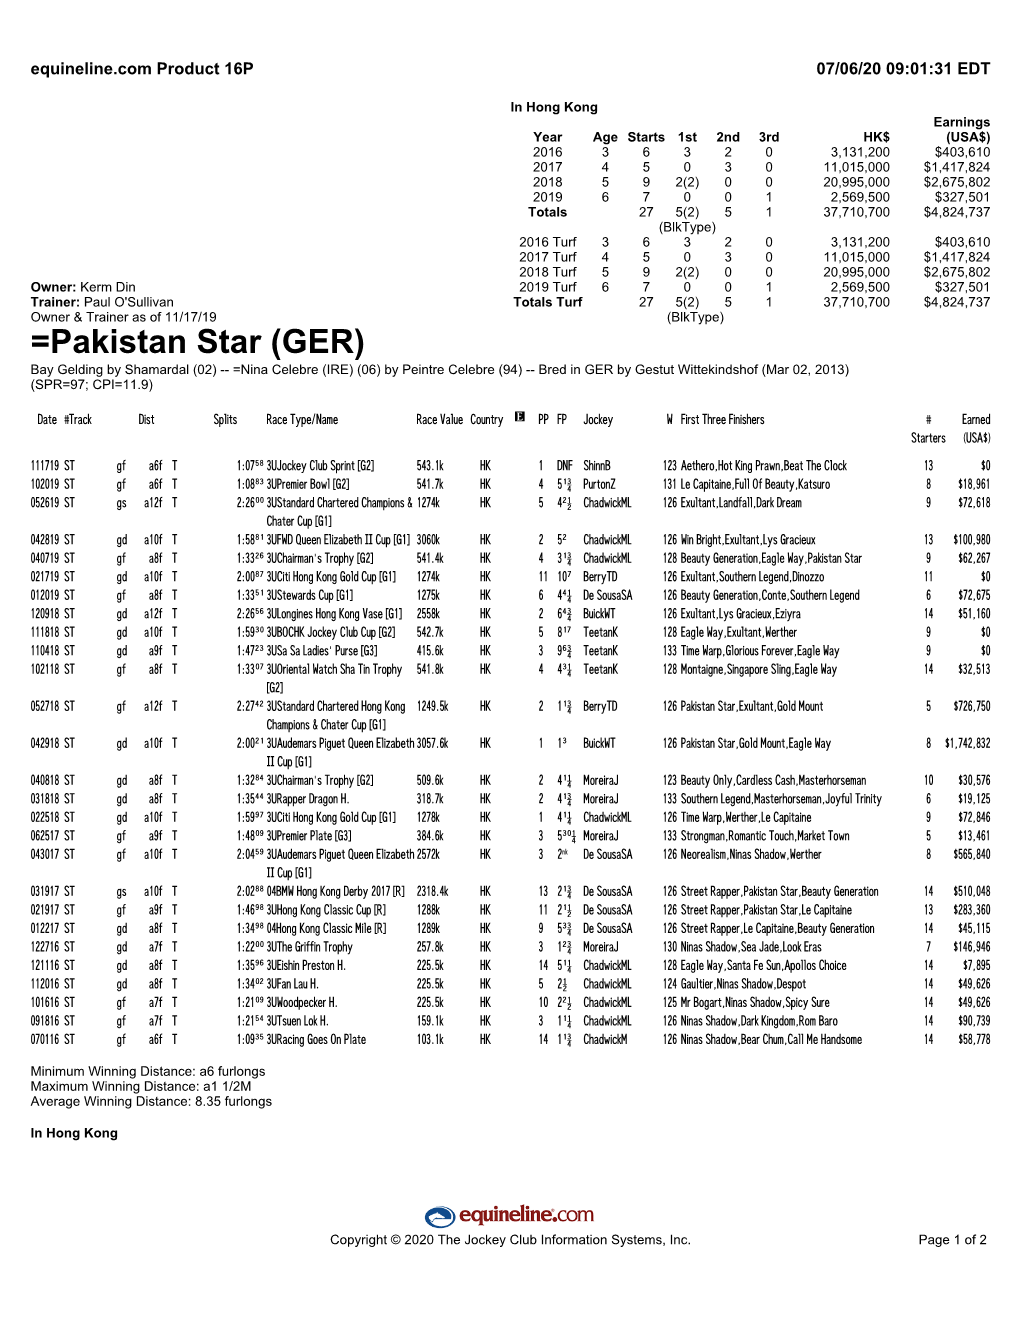 =Pakistan Star (GER)